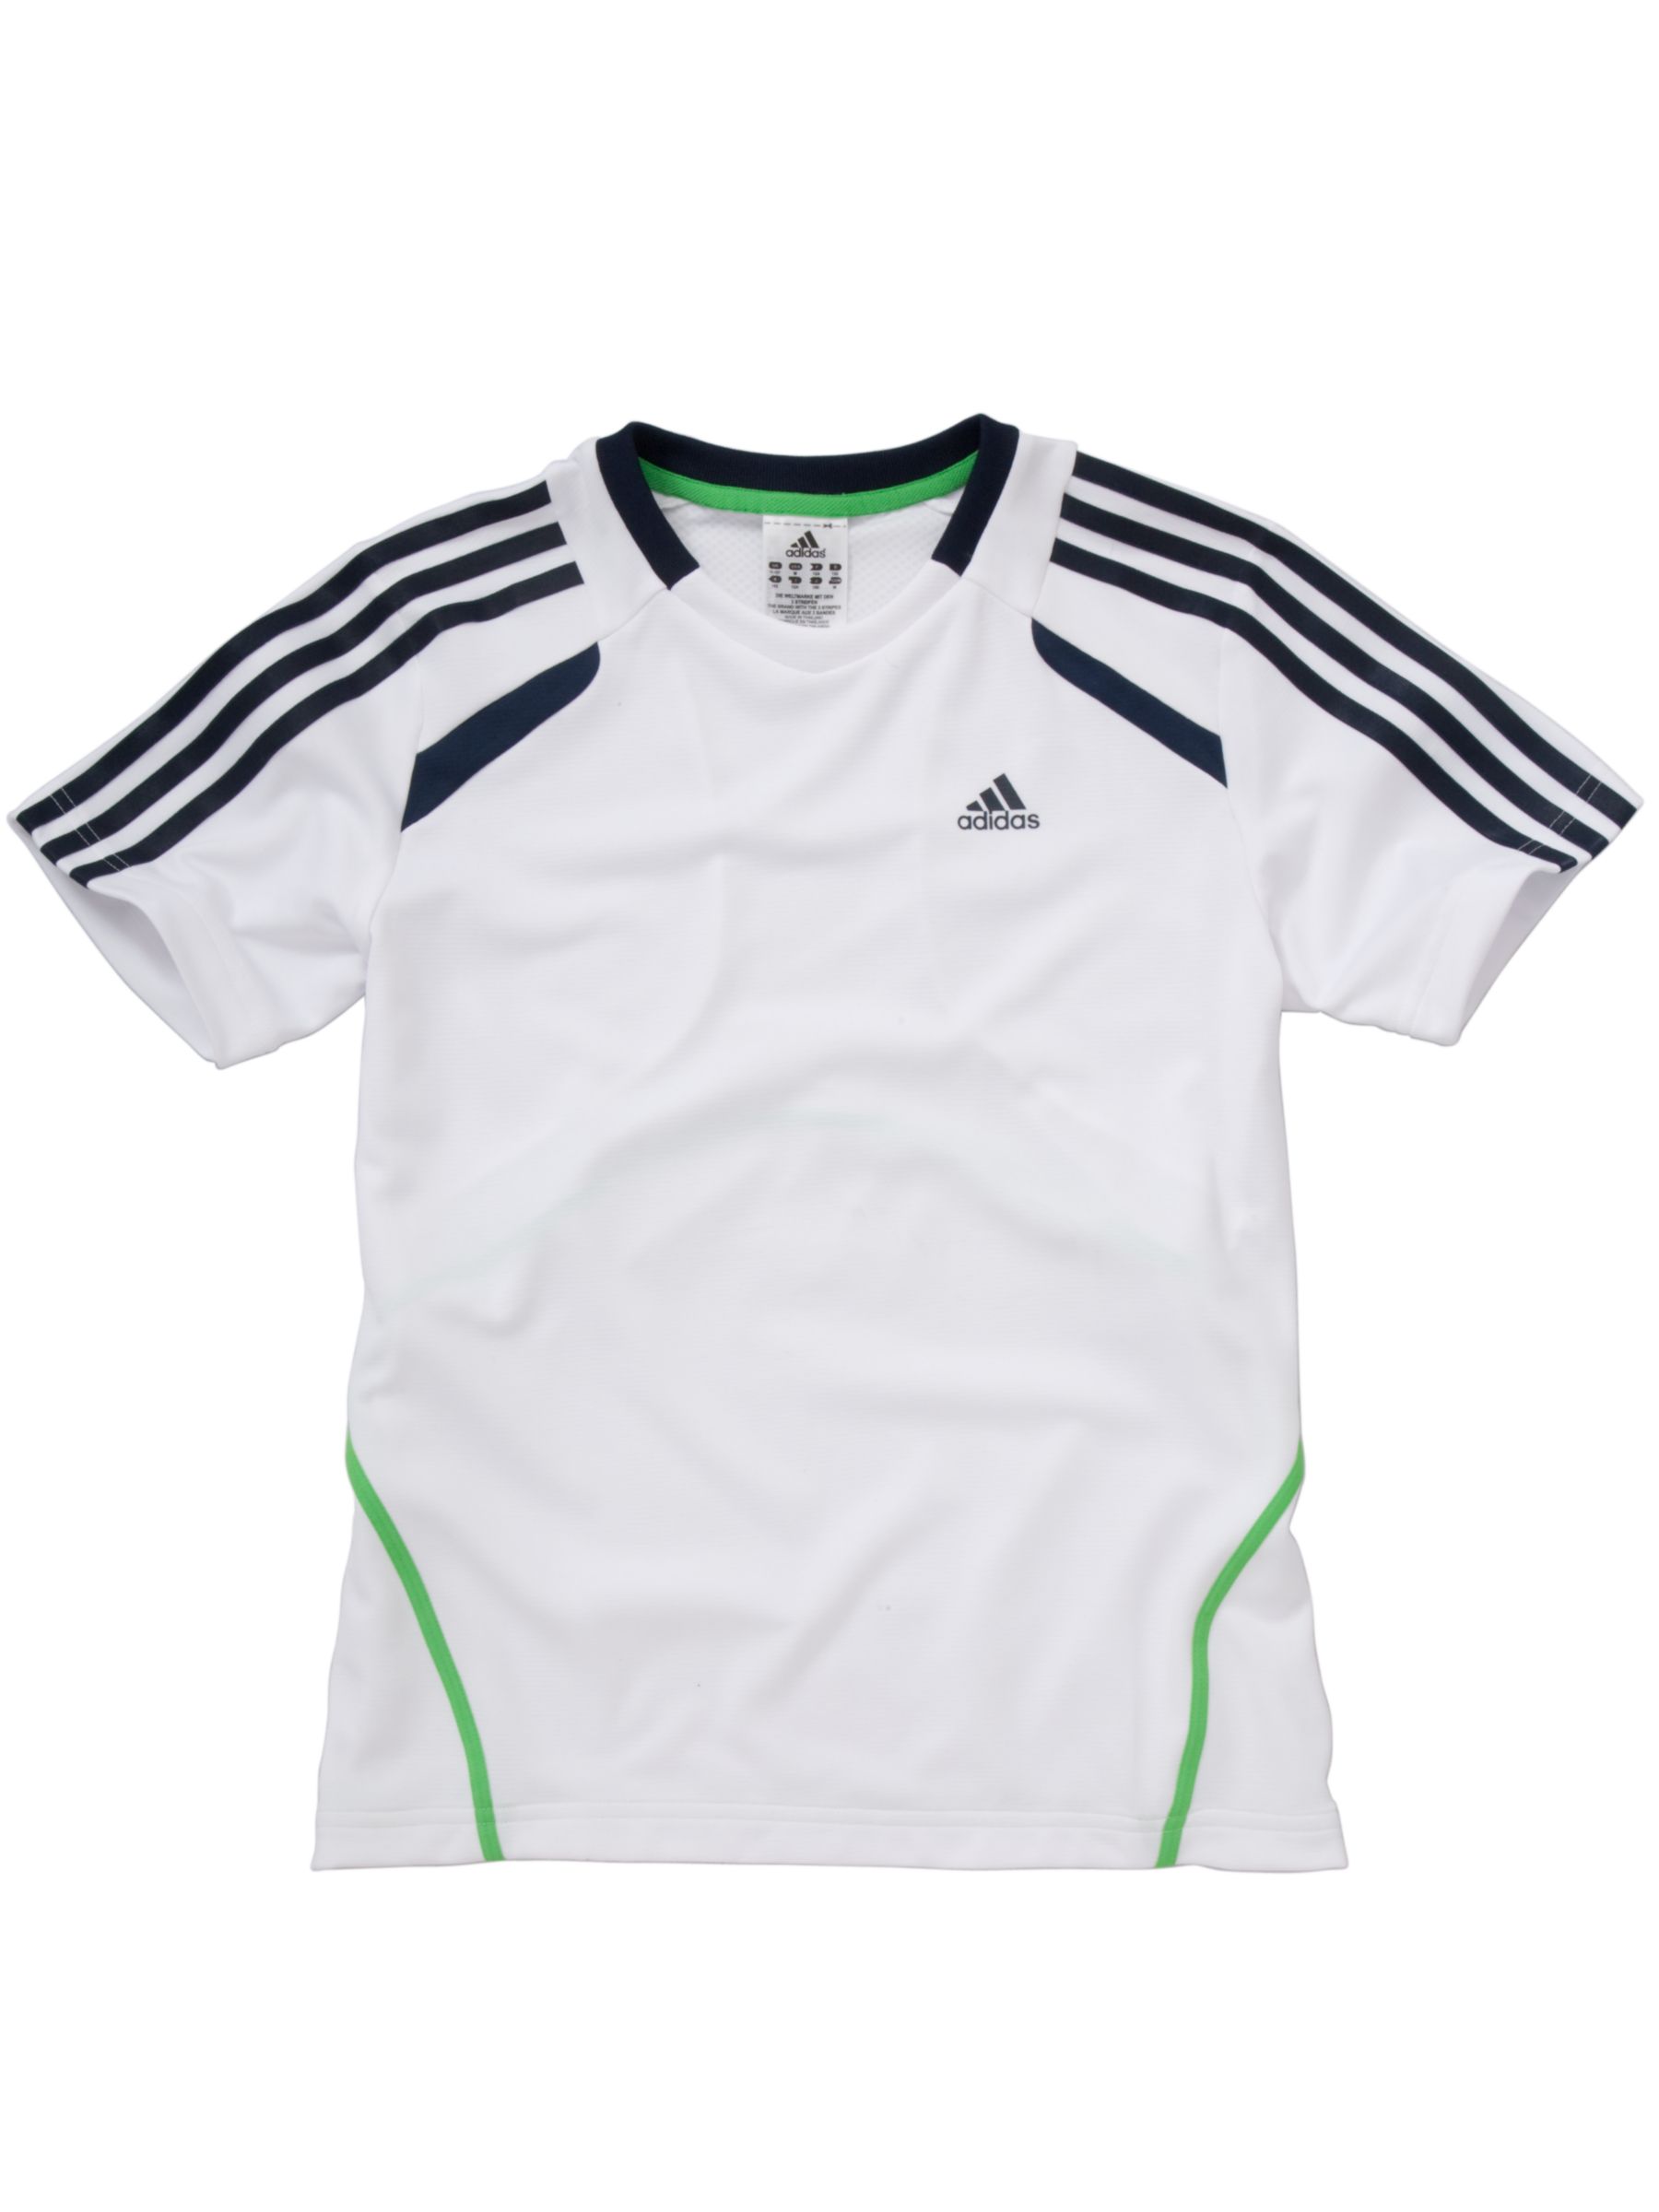 Adidas T-Shirt, White